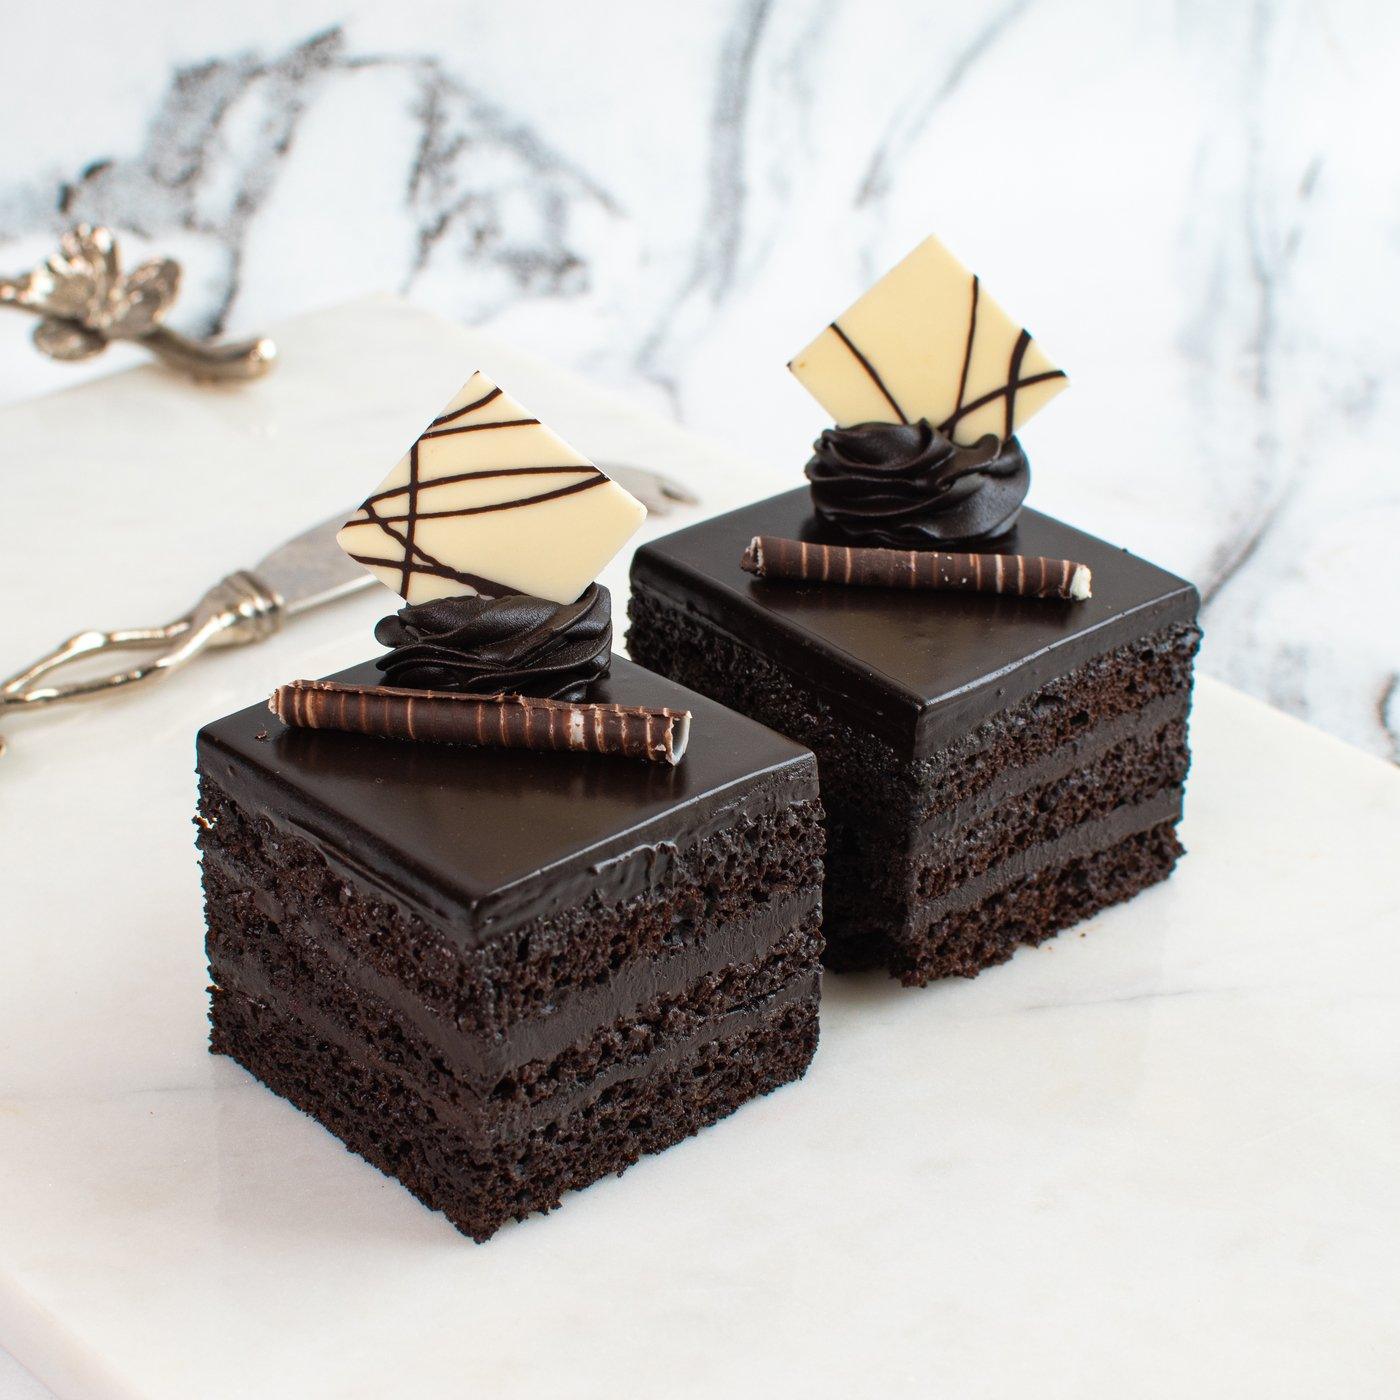 Rich Chocolate Truffle Cake | Chocolate Truffle Cake Recipe | How to Make Chocolate  Truffle Cake - YouTube